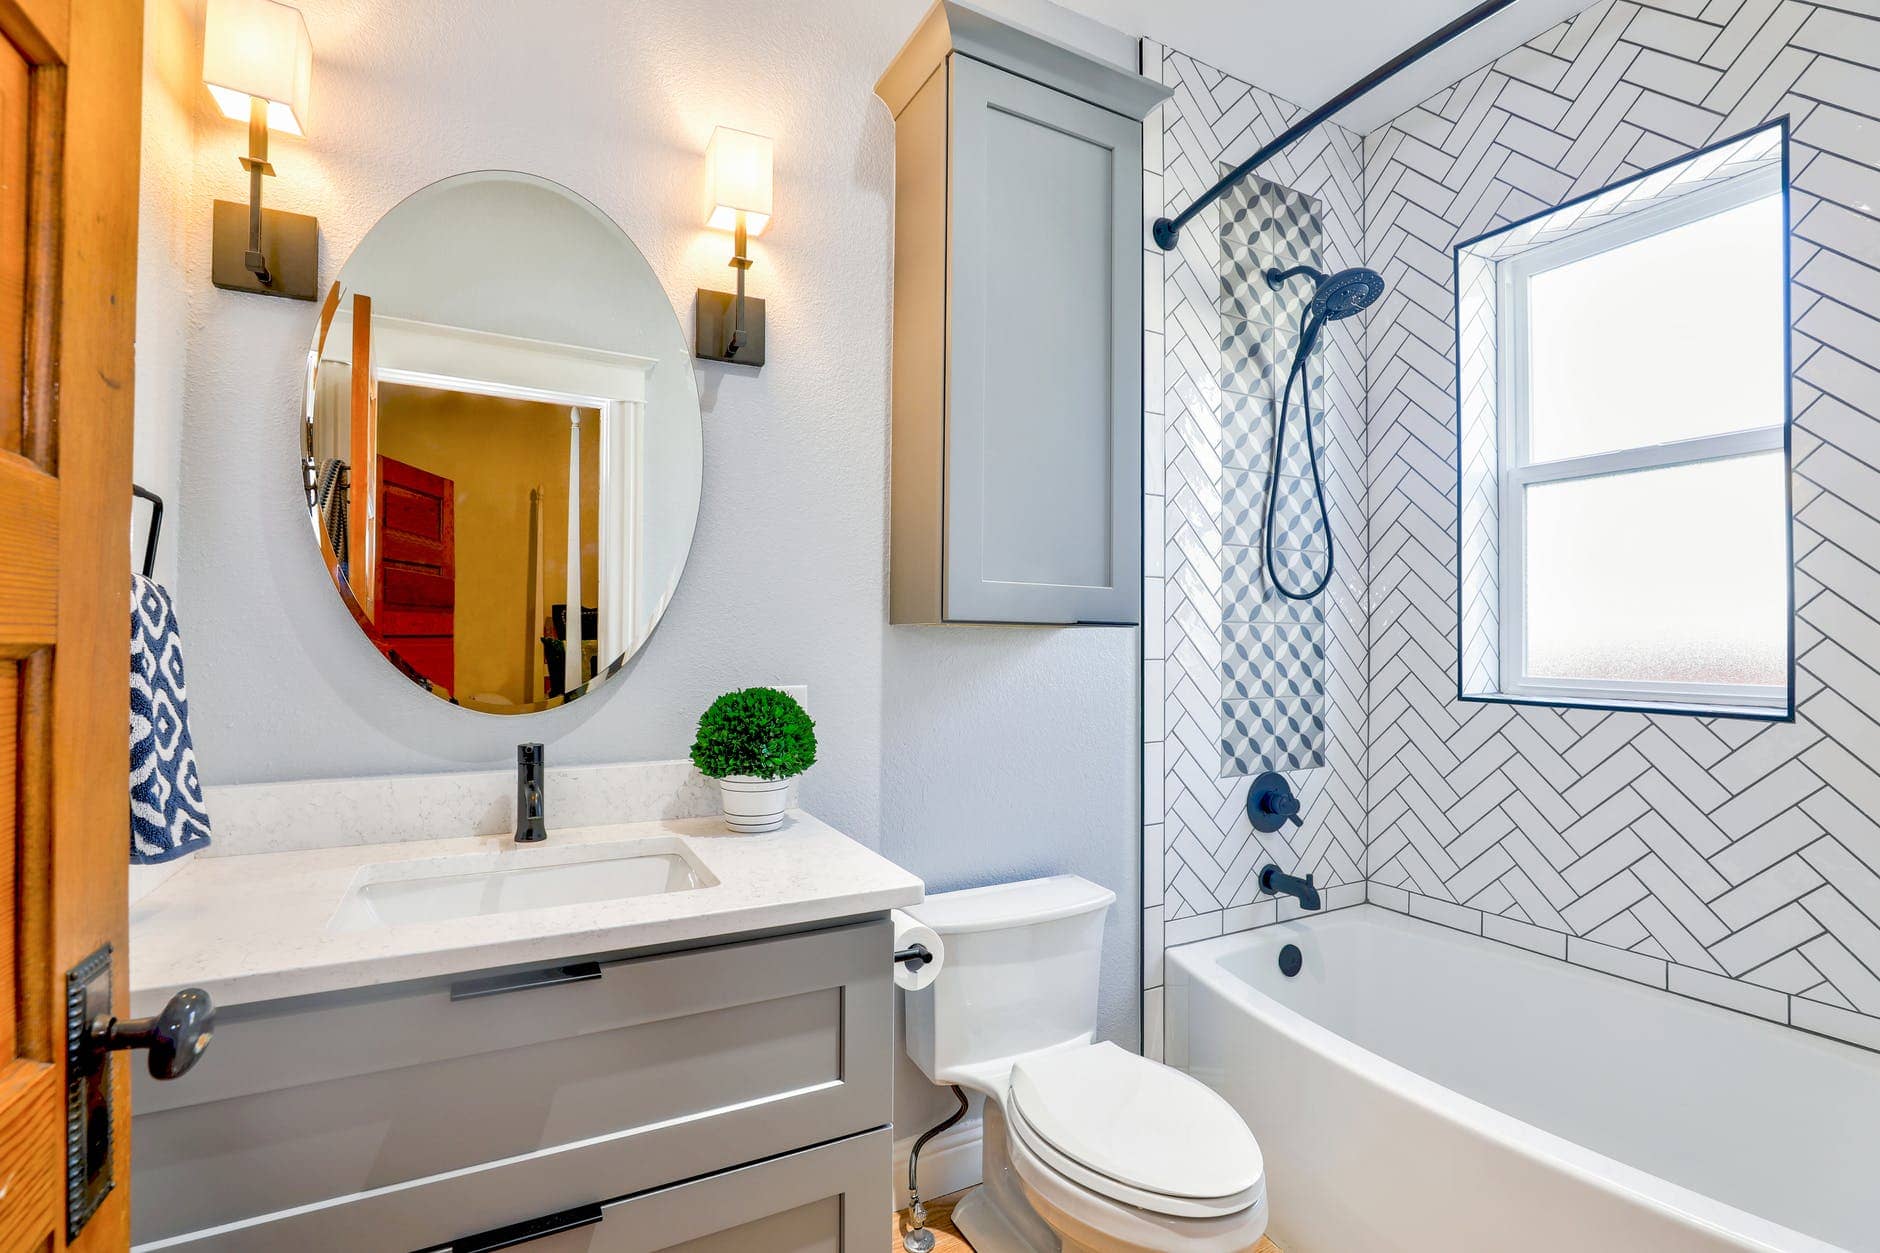 Fresh Design Ideas for Your Small Bathroom